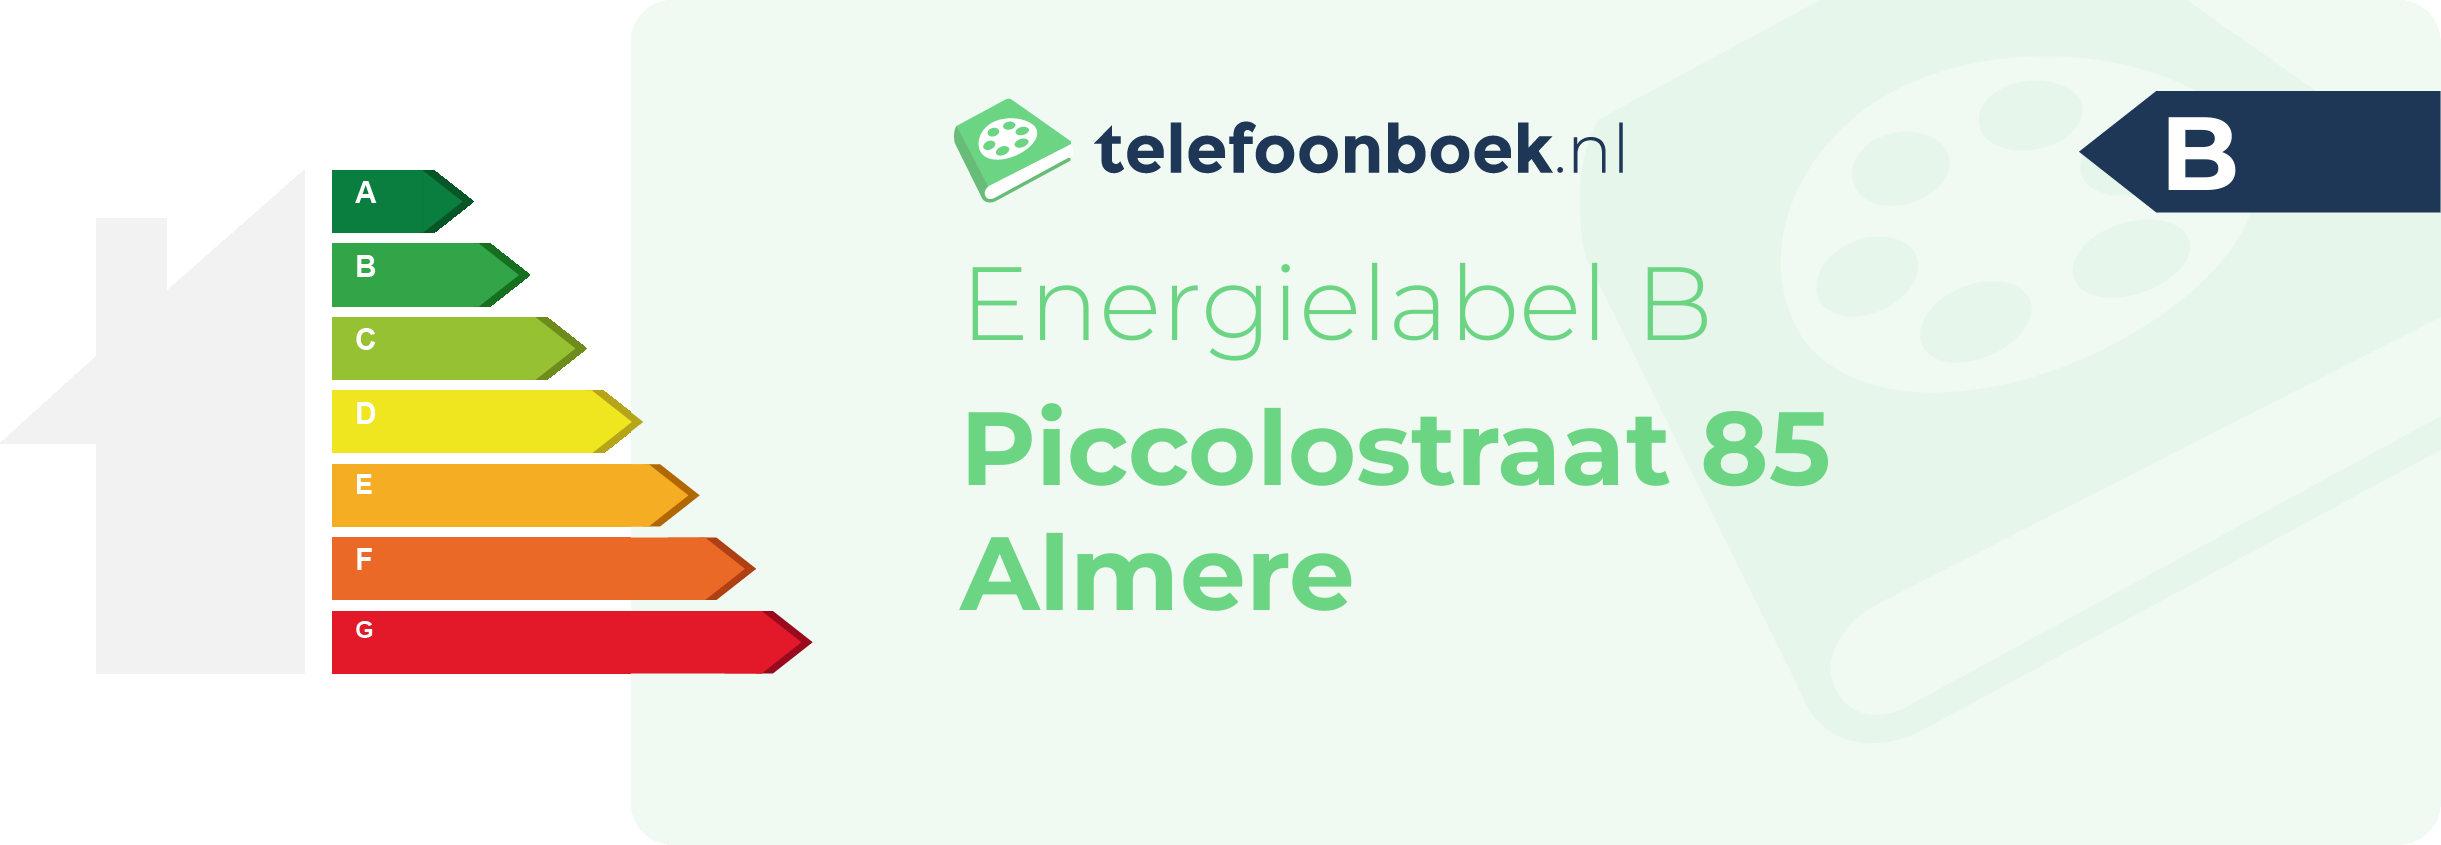 Energielabel Piccolostraat 85 Almere